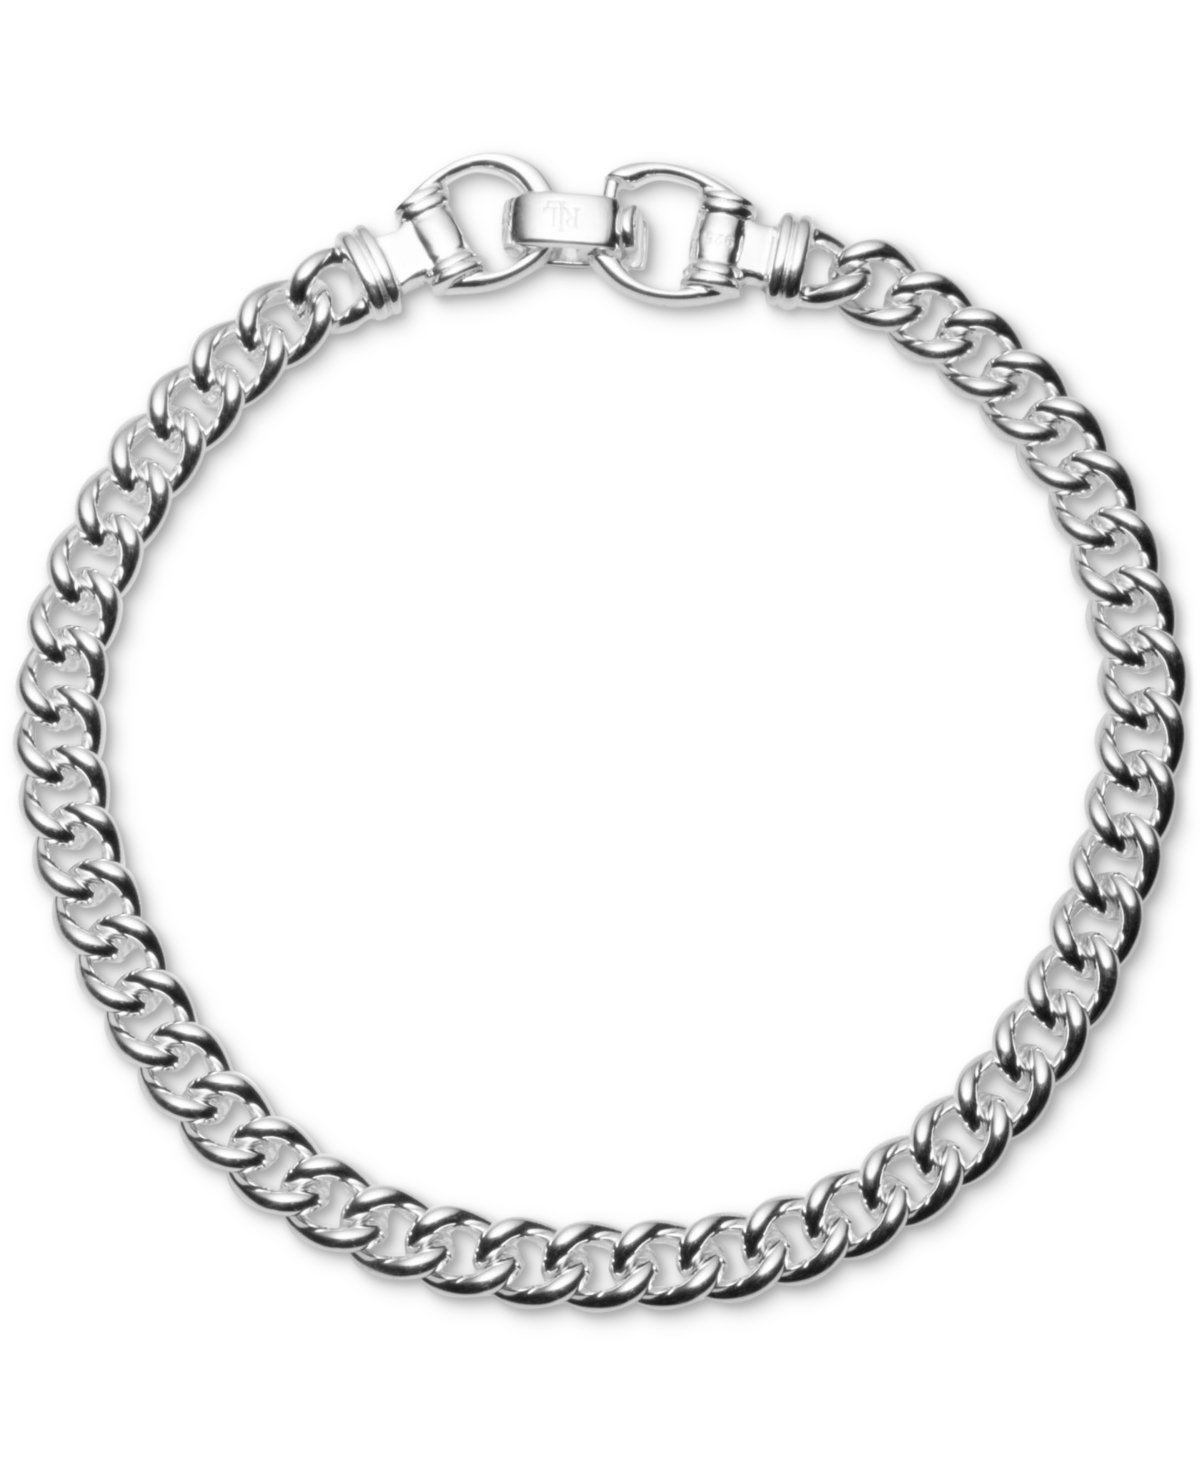 Lauren Ralph Lauren Curb Link Chain Bracelet in Sterling Silver - Sterling Silver